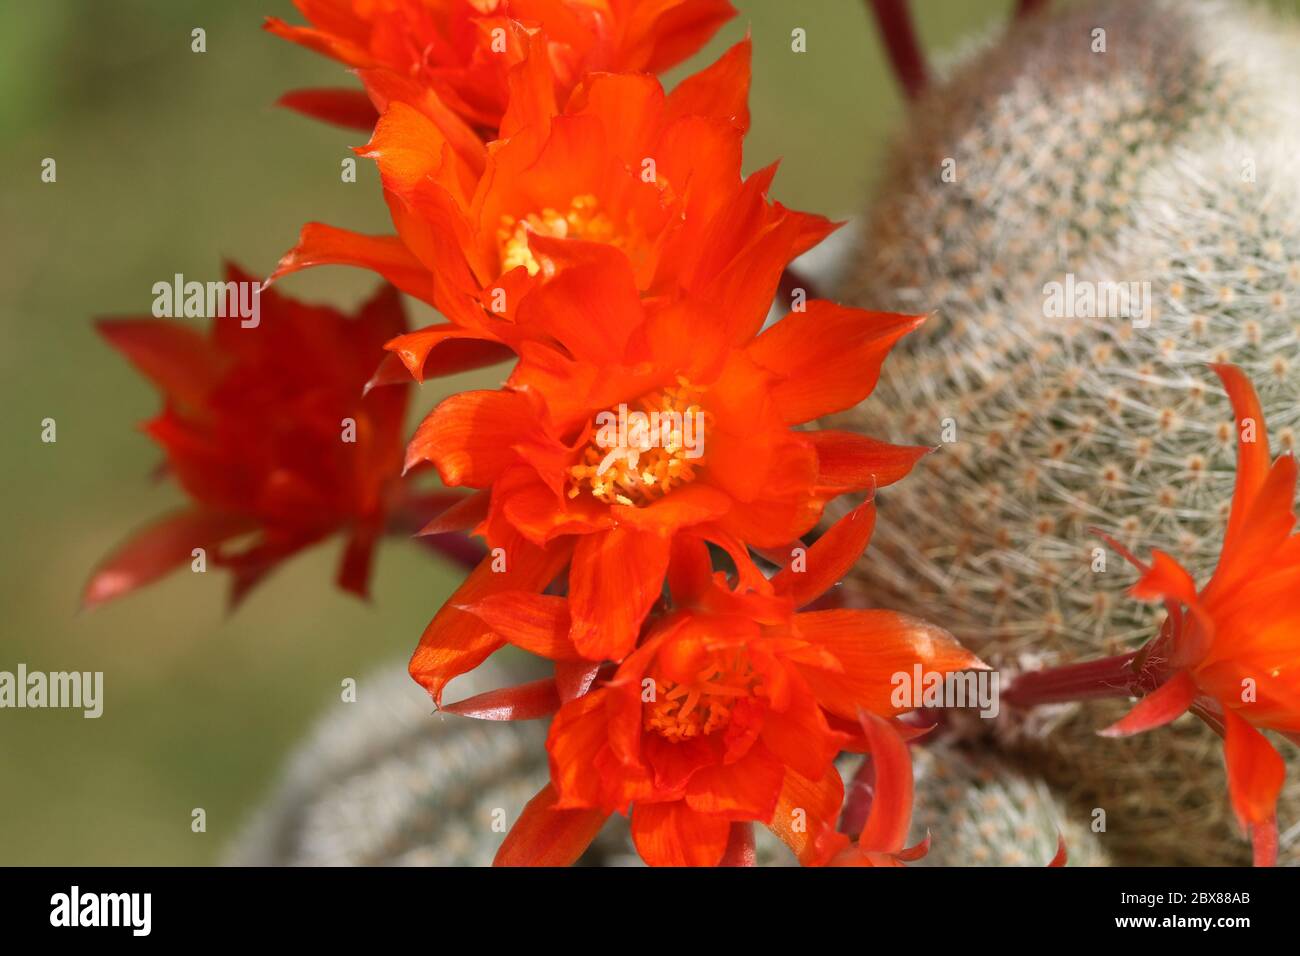 Un grupo de Cactus florido, Rebutia lima naranja. Foto de stock